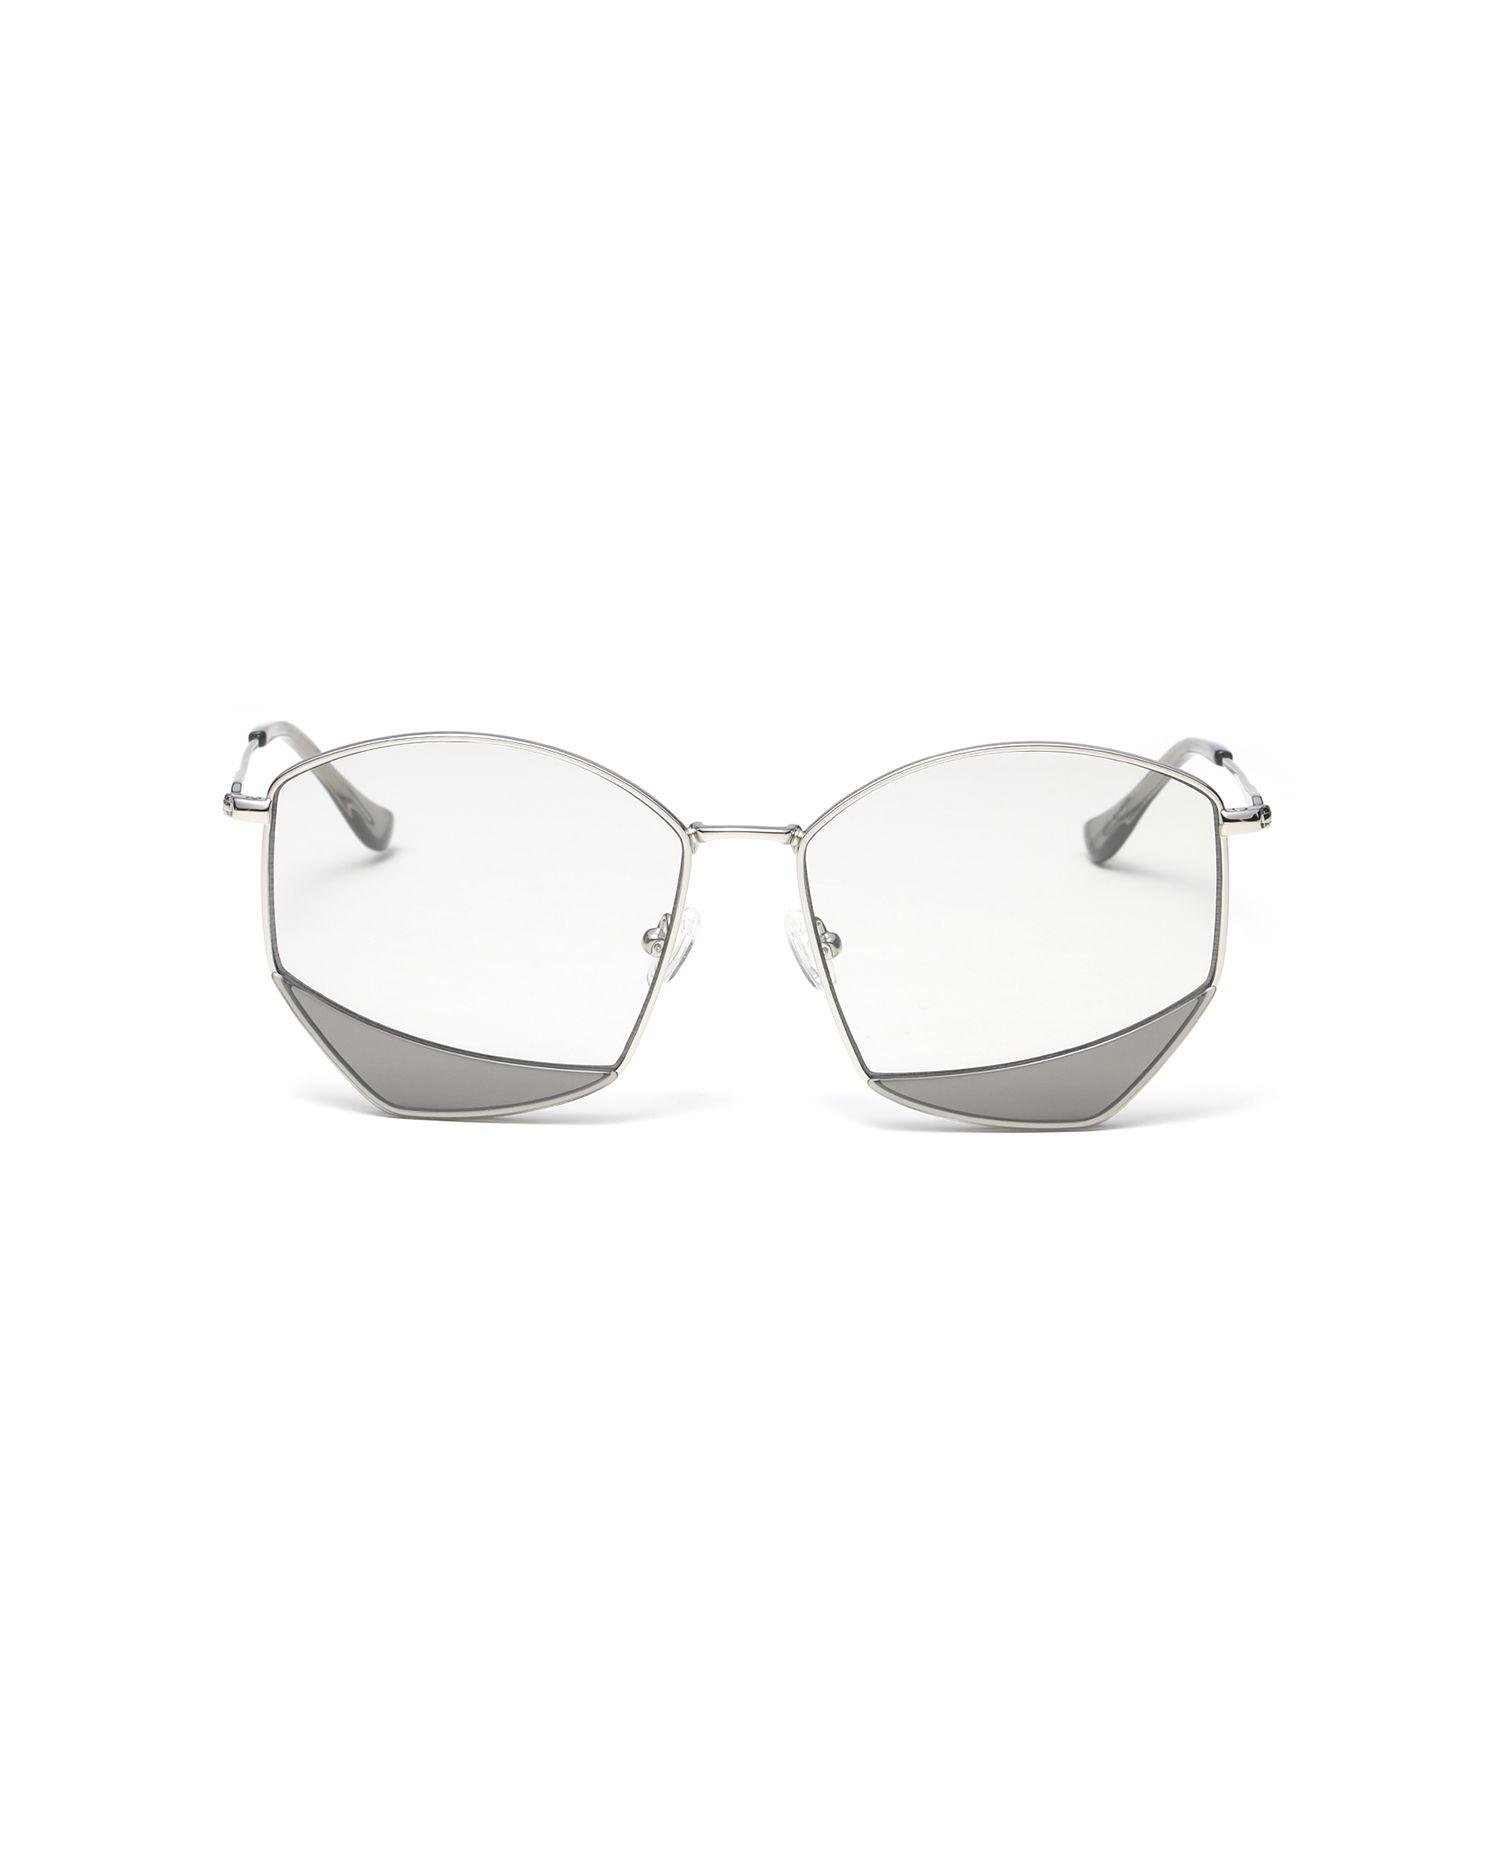 Irregular frame sunglasses by BIAS